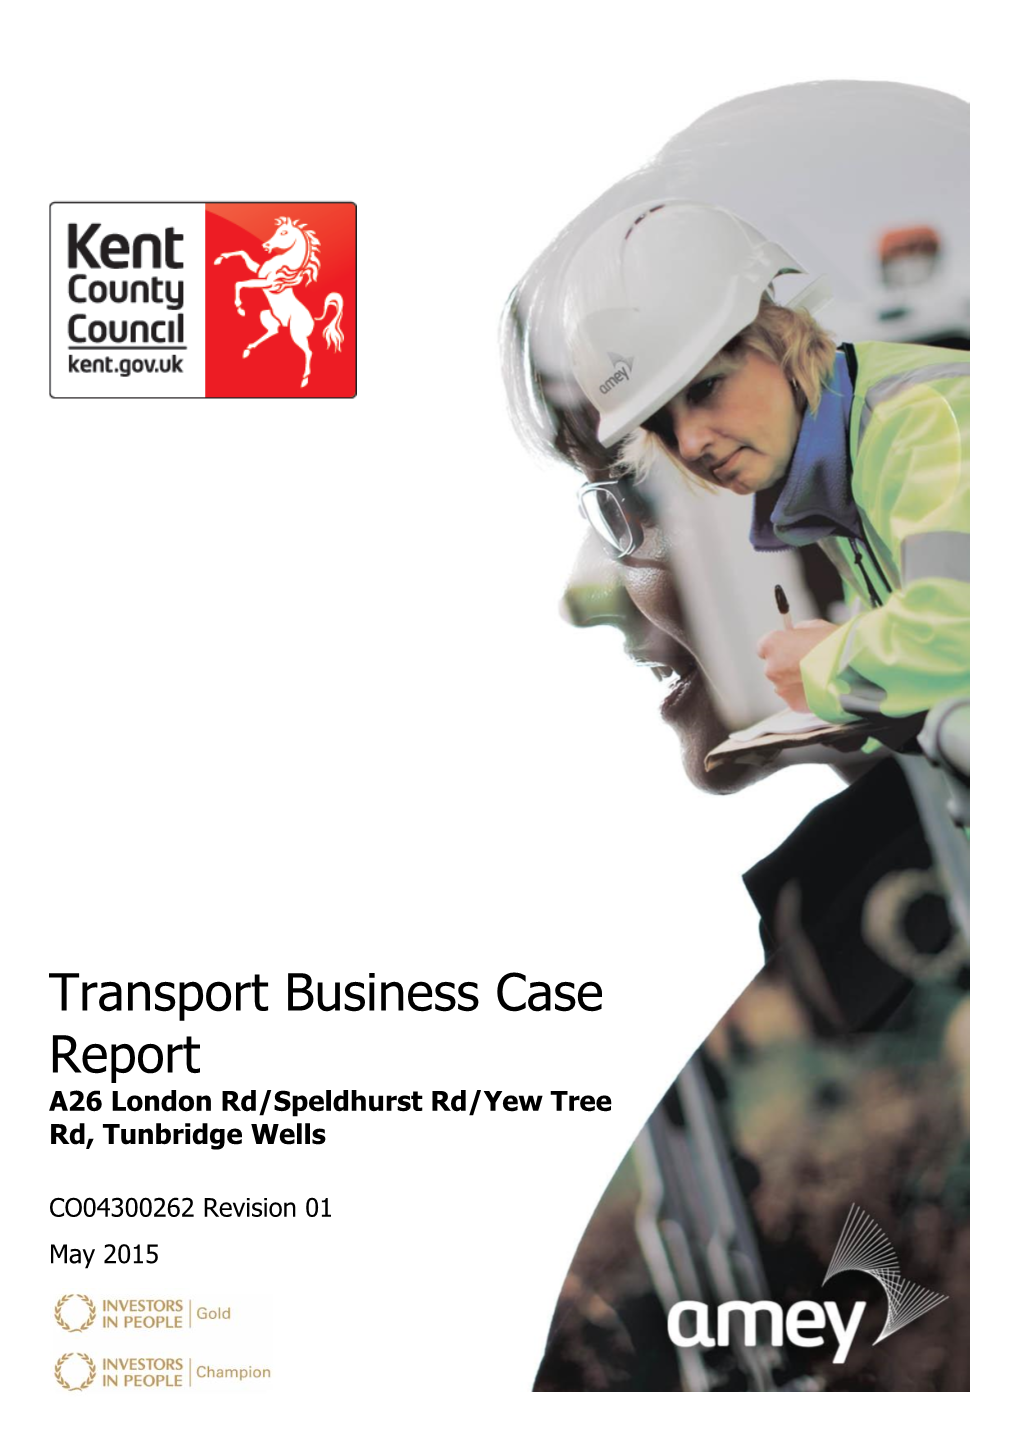 Transport Business Case Report A26 London Rd/Speldhurst Rd/Yew Tree Rd, Tunbridge Wells